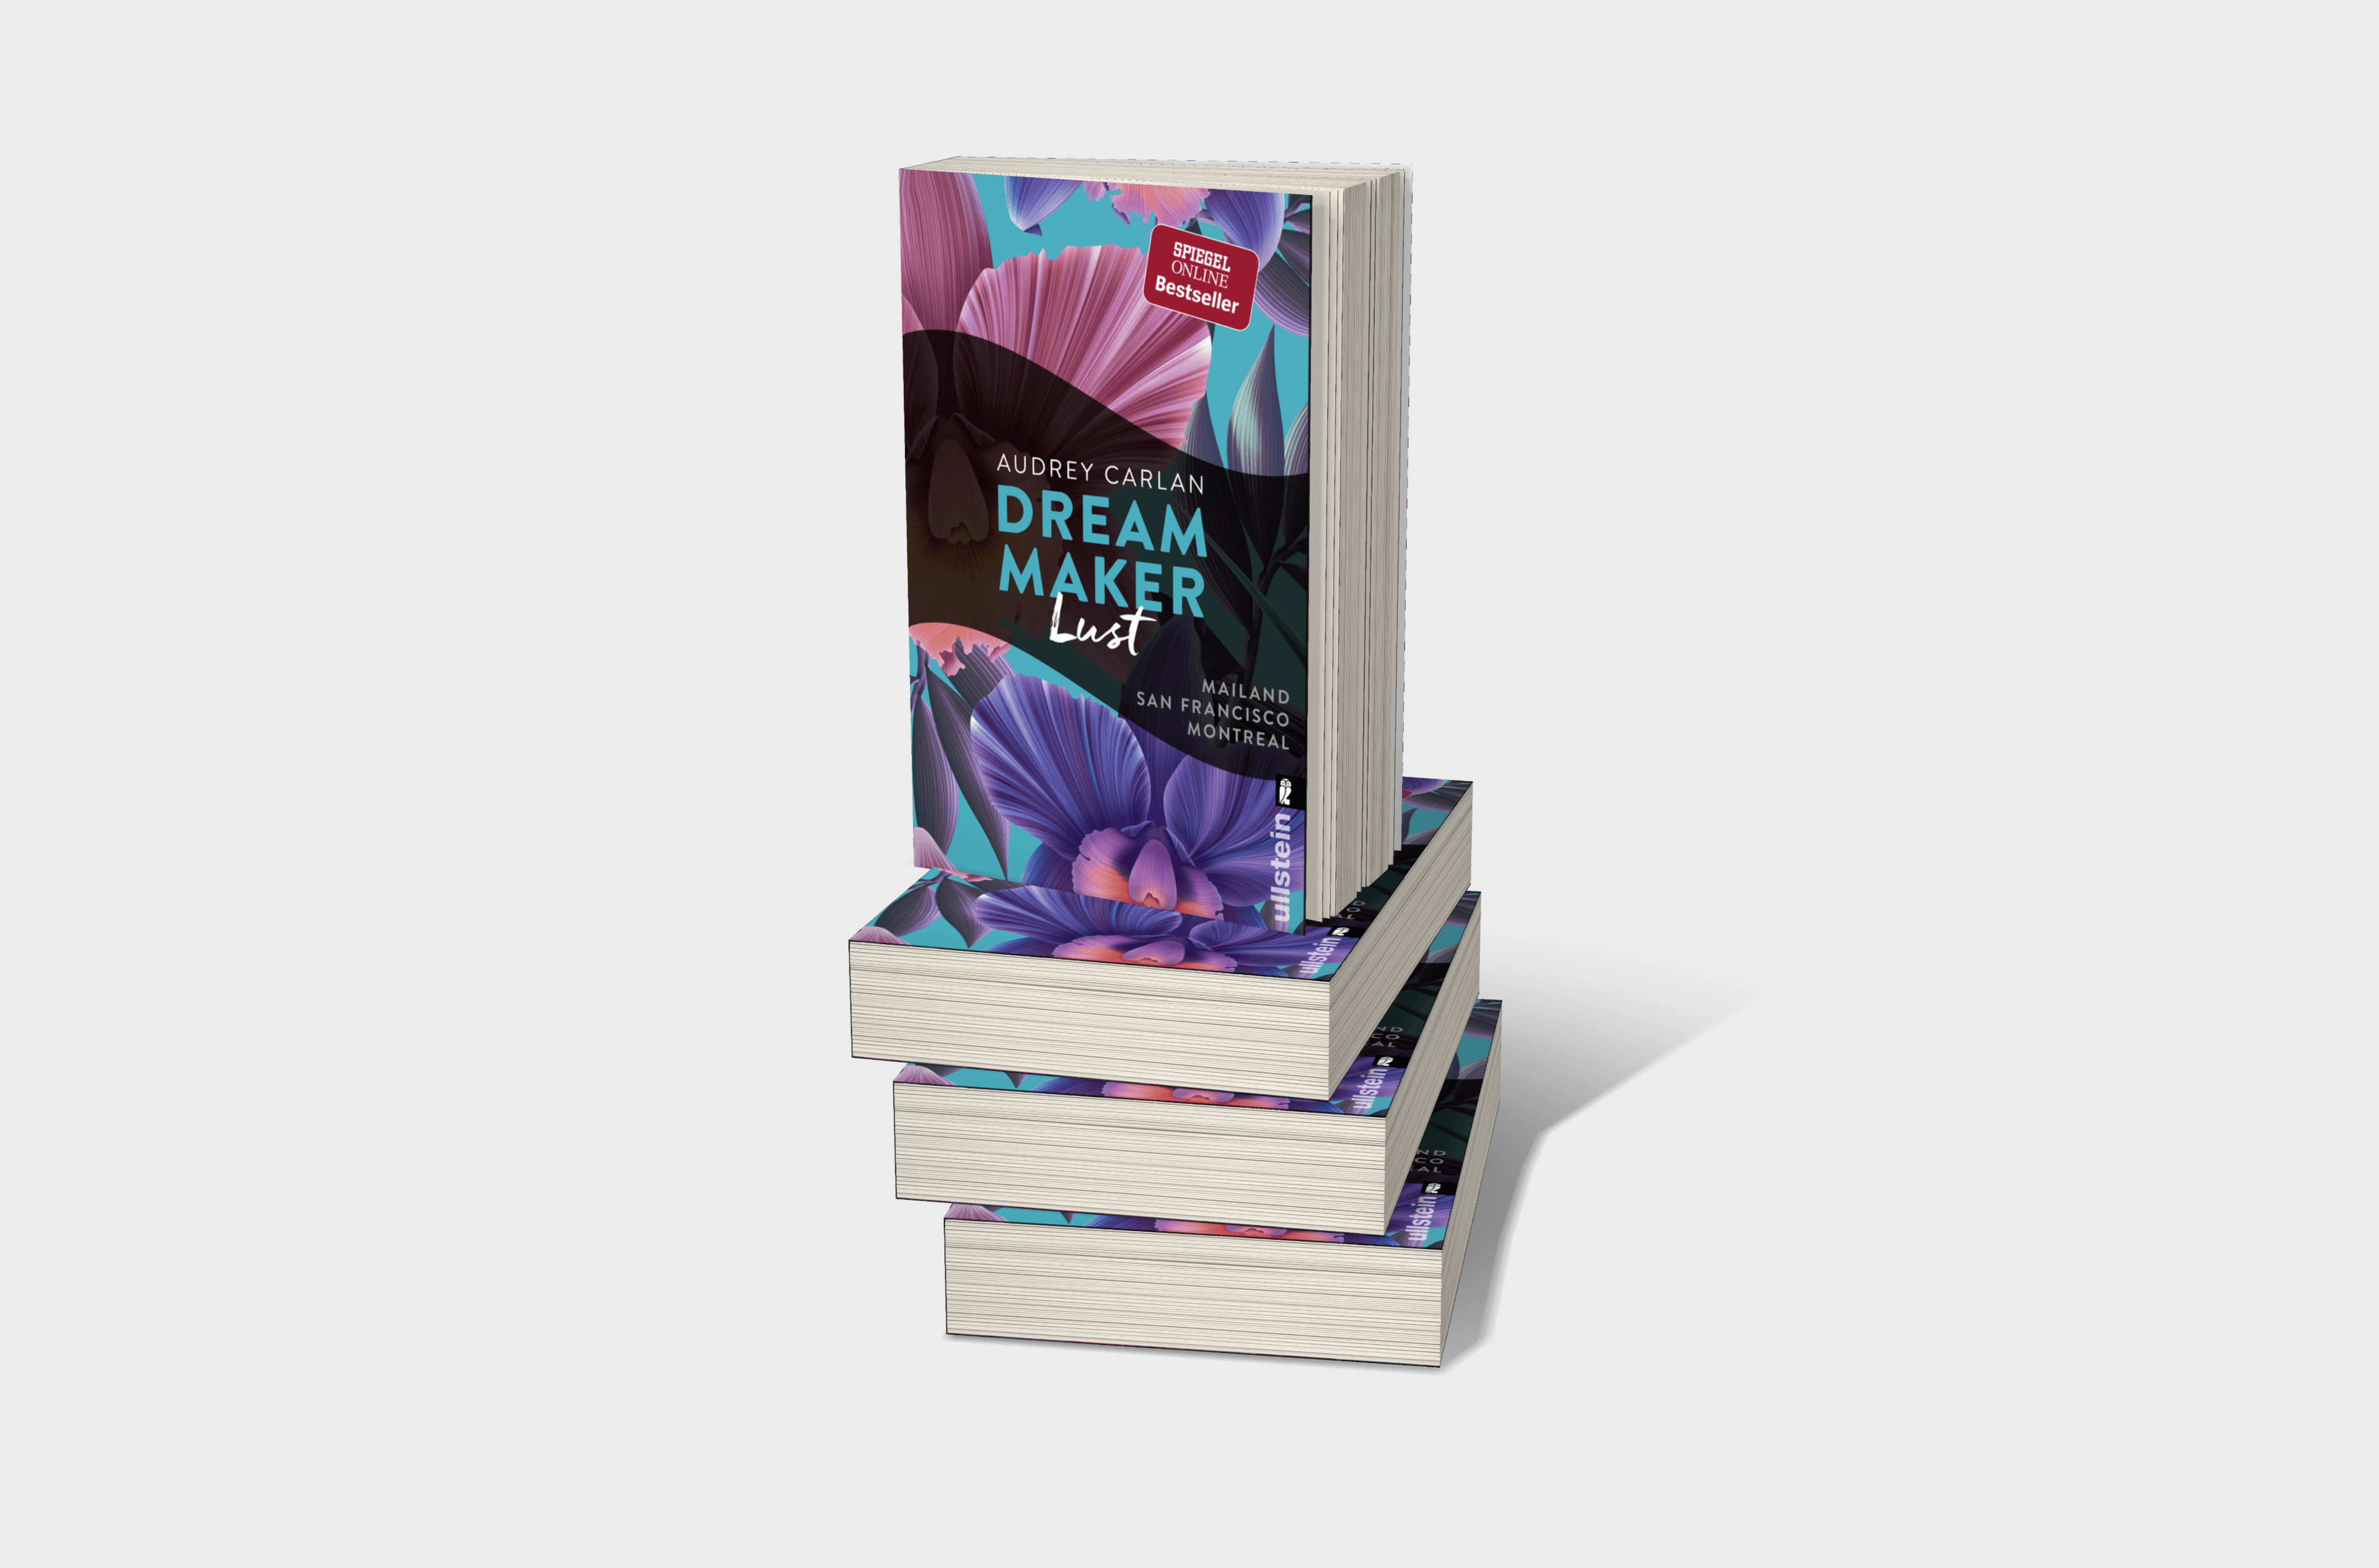 Buchcover von Dream Maker - Lust (The Dream Maker 2)